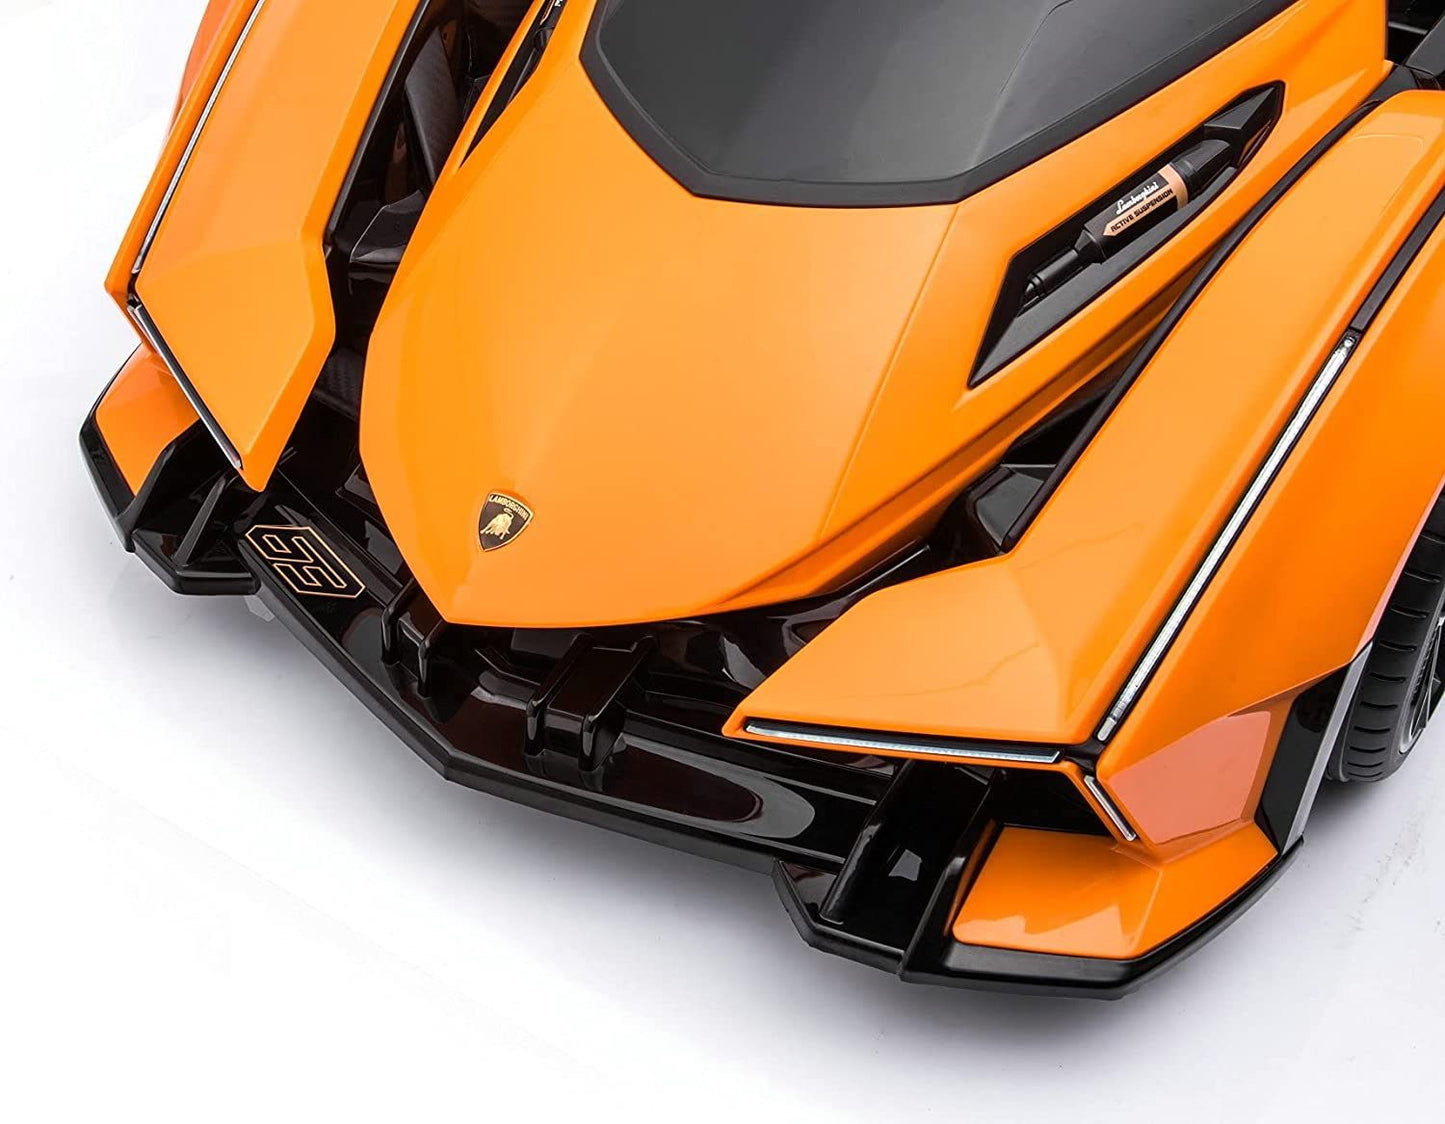 Lamborghini V12 Vision Gran Turismo Ride on Sports Car- Orange